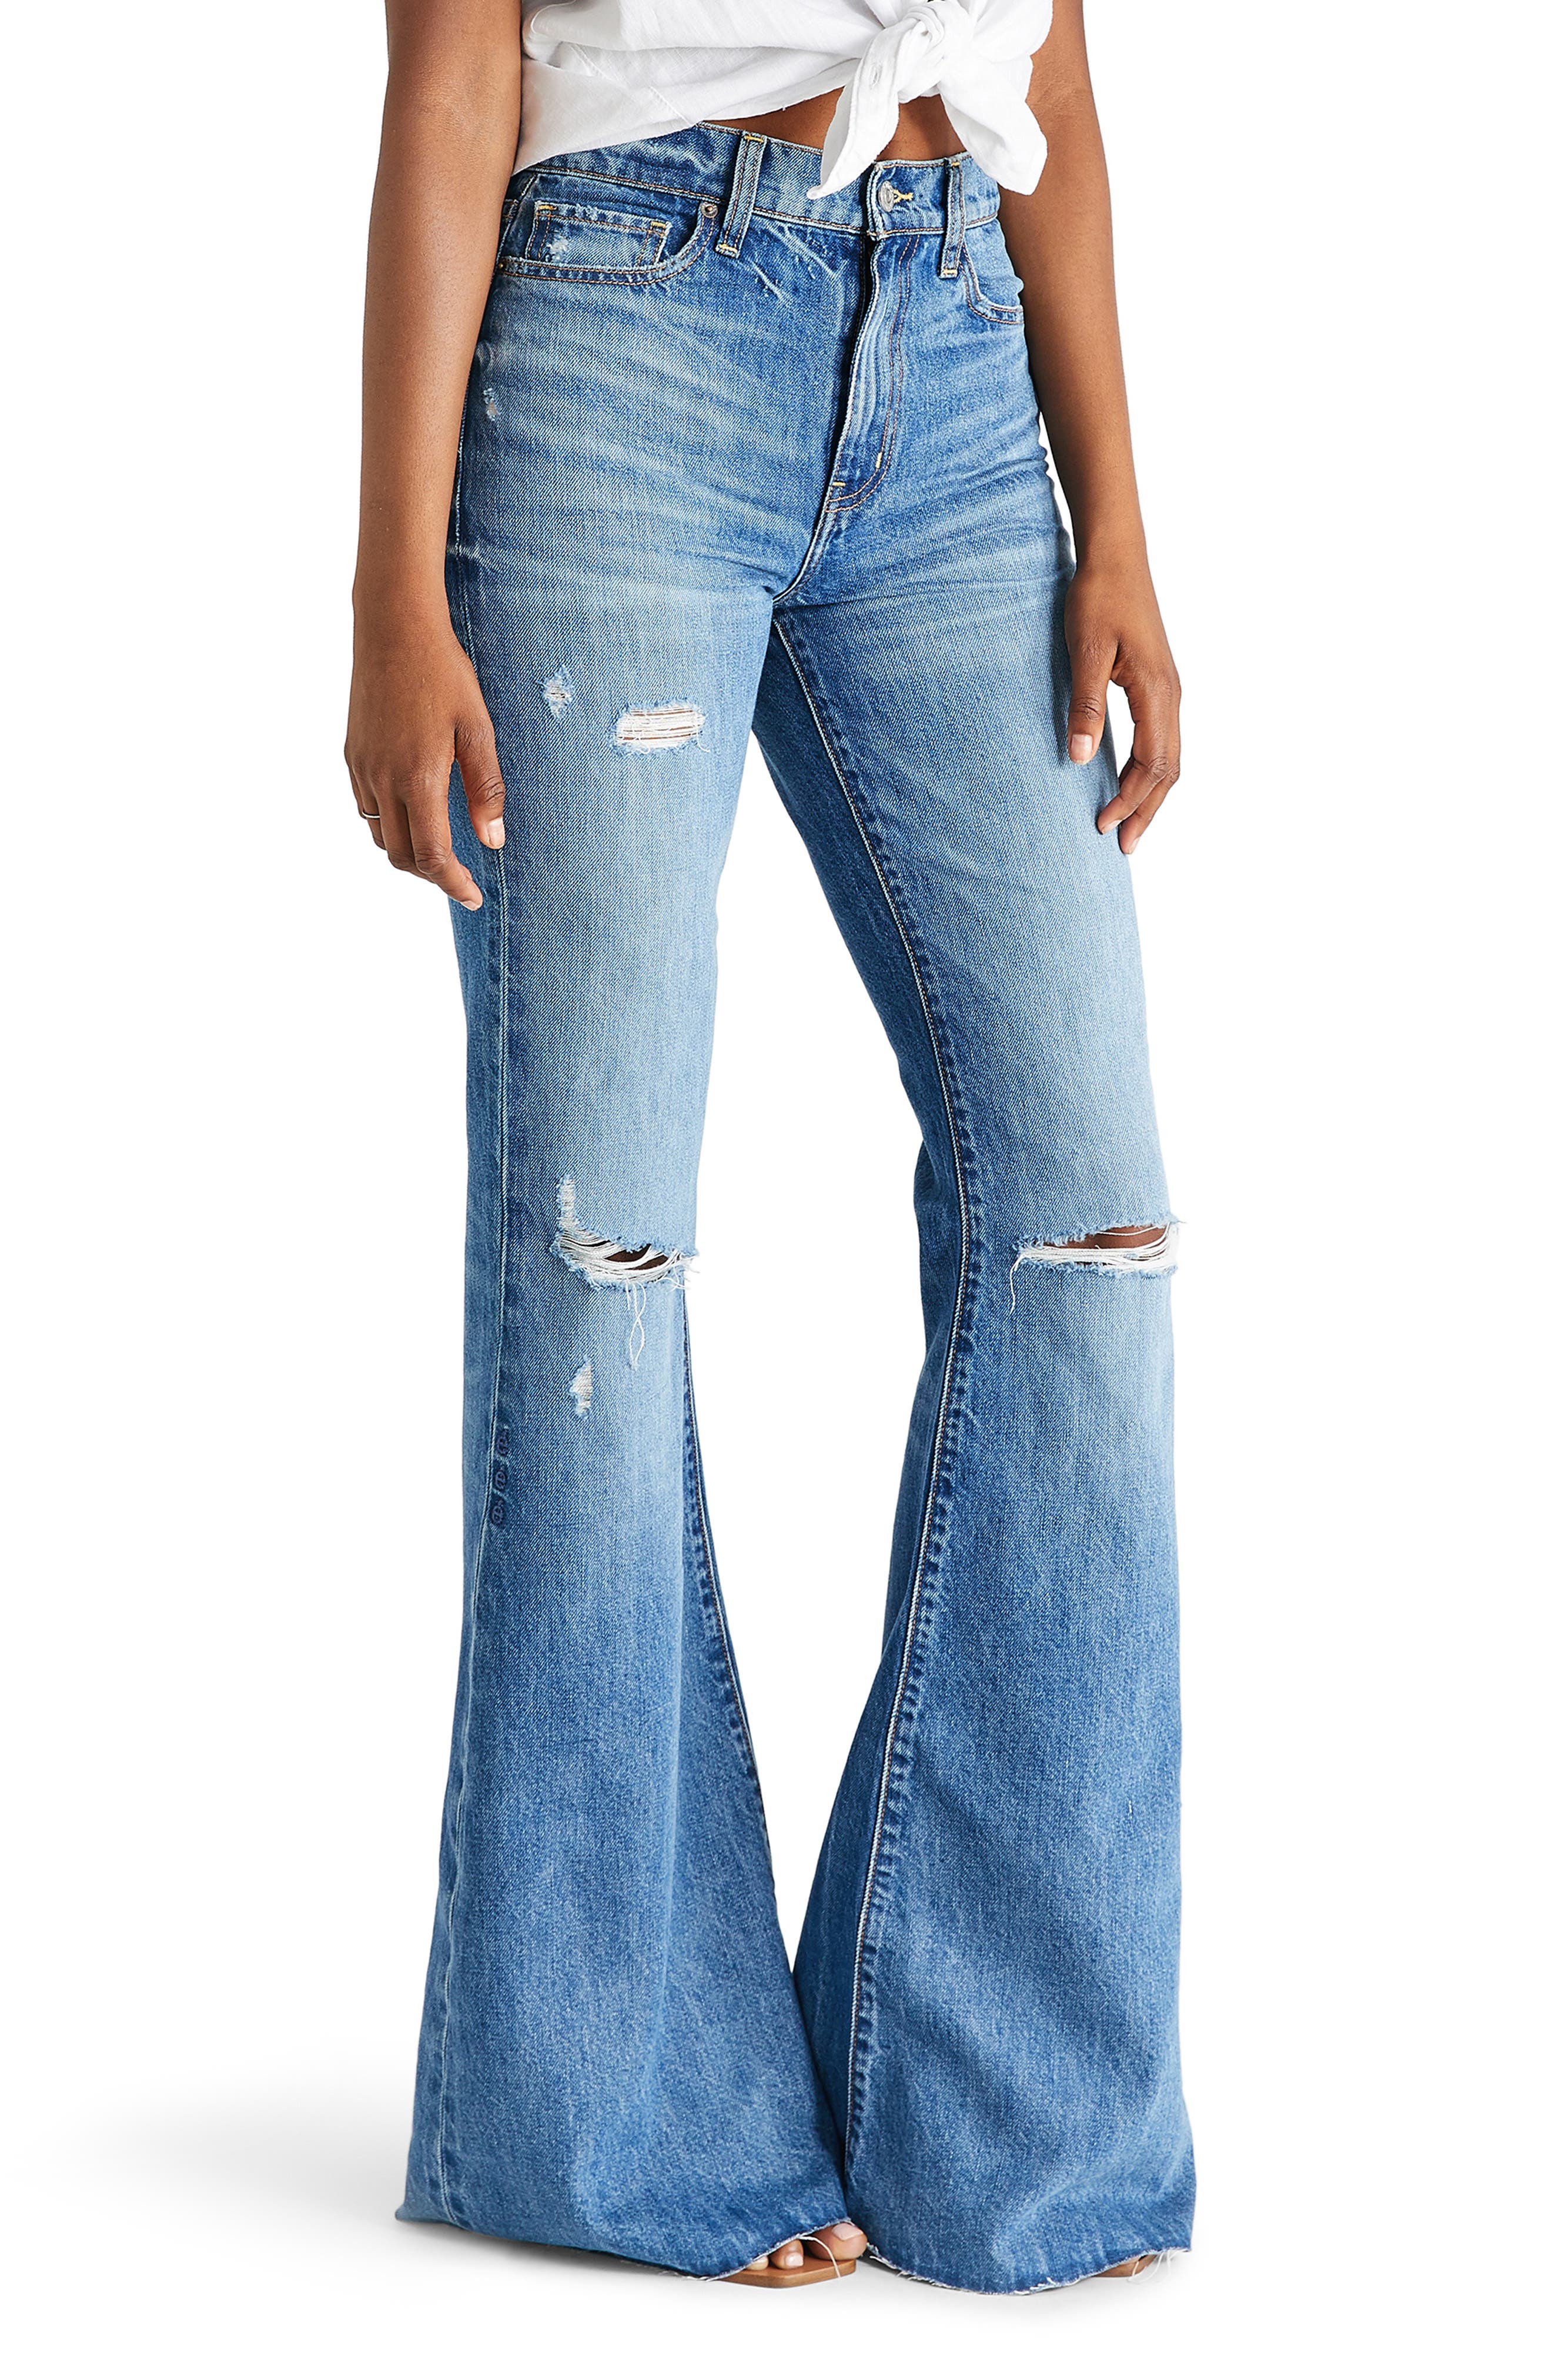 jeans high waist flare